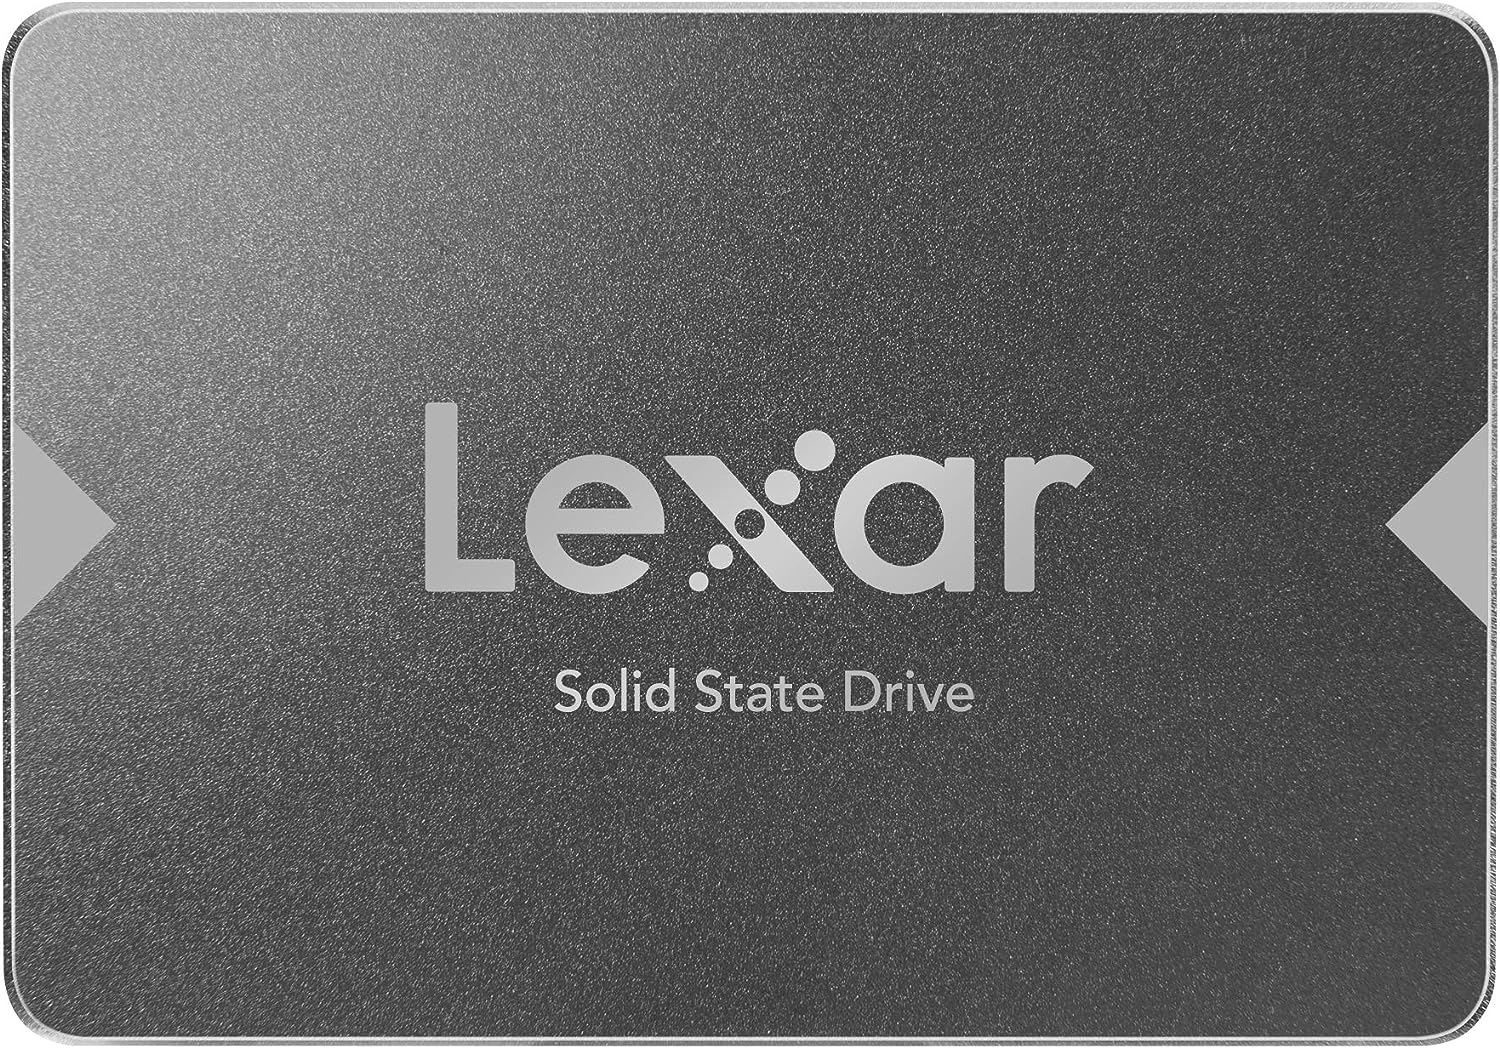 Lexar NS100 2TB 2.5” SATA III Internal SSD $68 Amazon